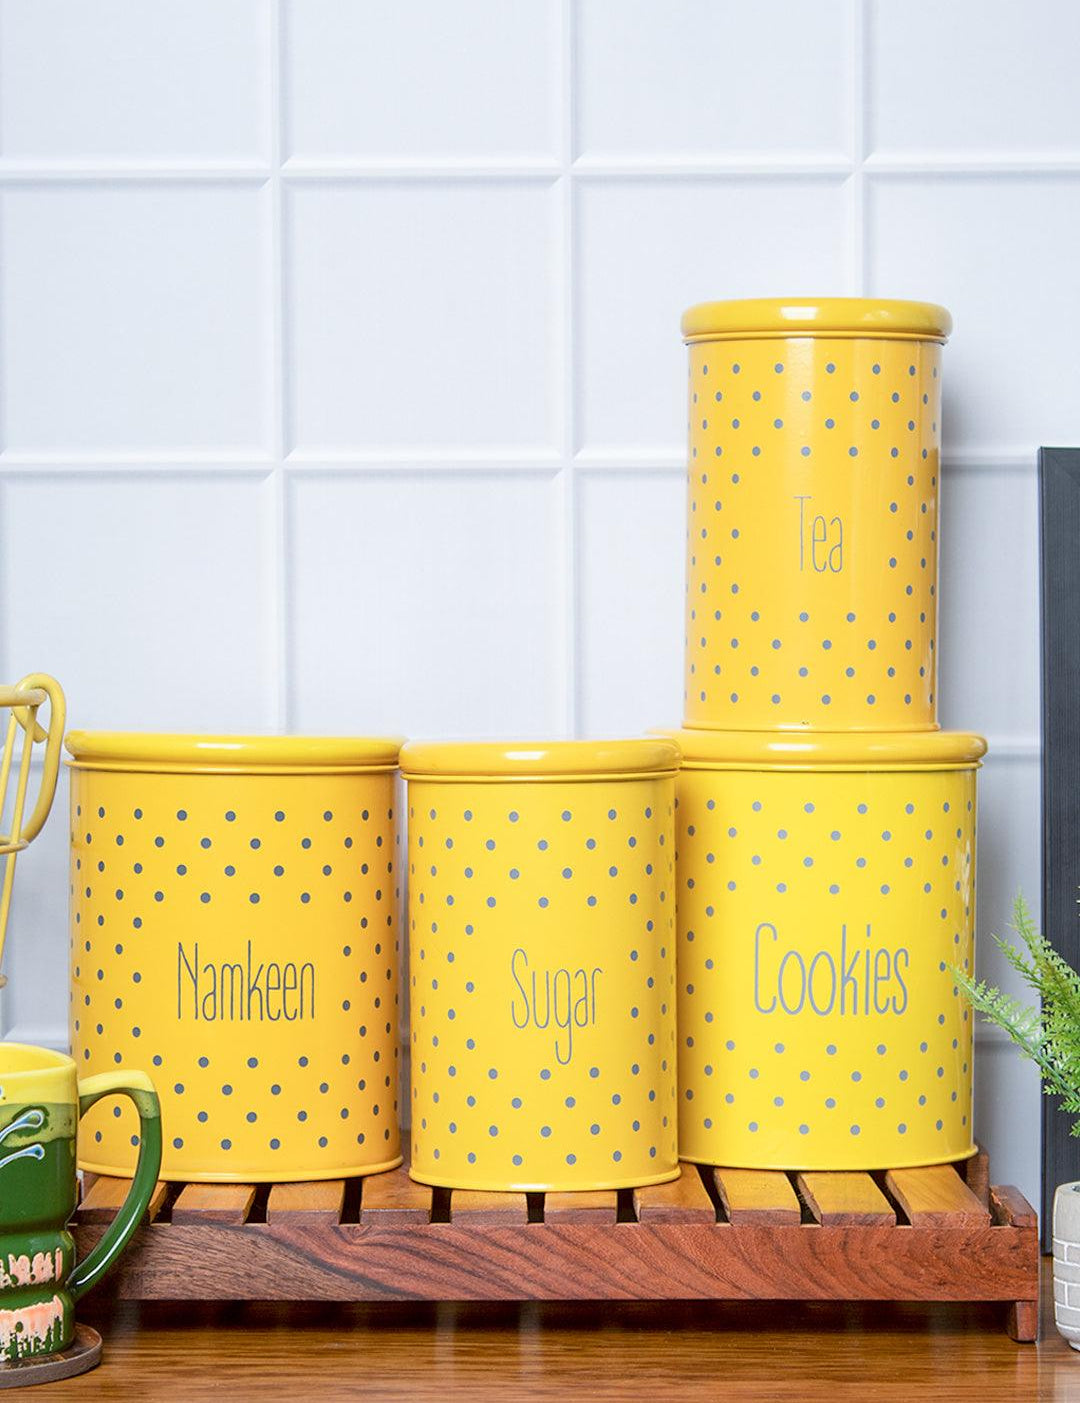 Tea & Sugar Jar (Each 900 Ml) + Cookie & Namkeen Jar (Each 1700 Ml) - Polka Dot Yellow, Set Of 4 - MARKET 99